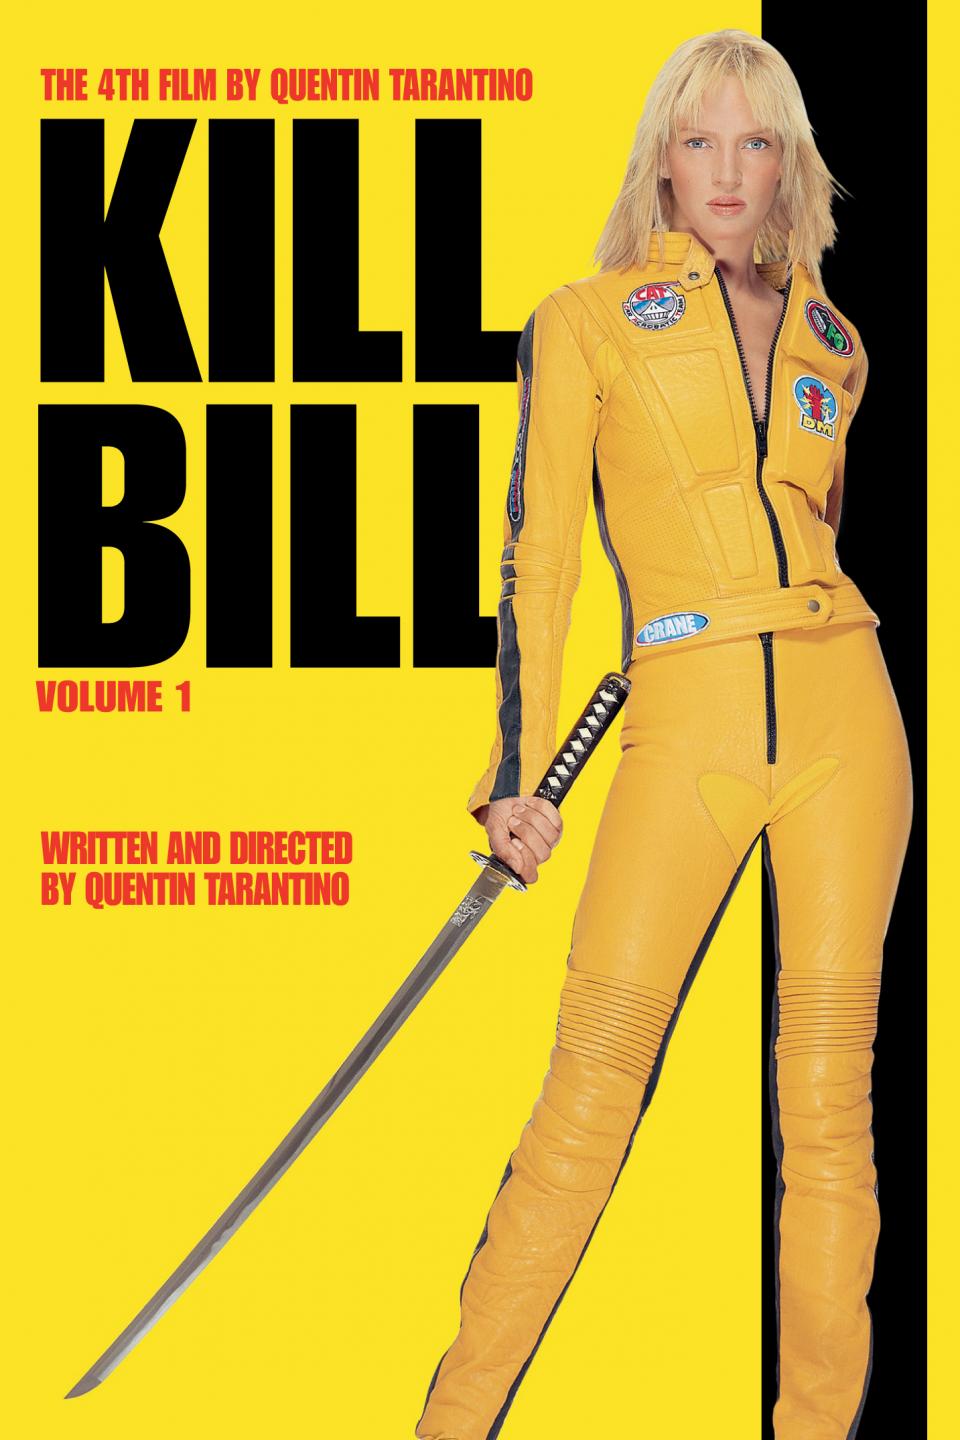 jury indre grus KILL BILL movie poster analysis – Welcome to Mark Will's WordPress blog